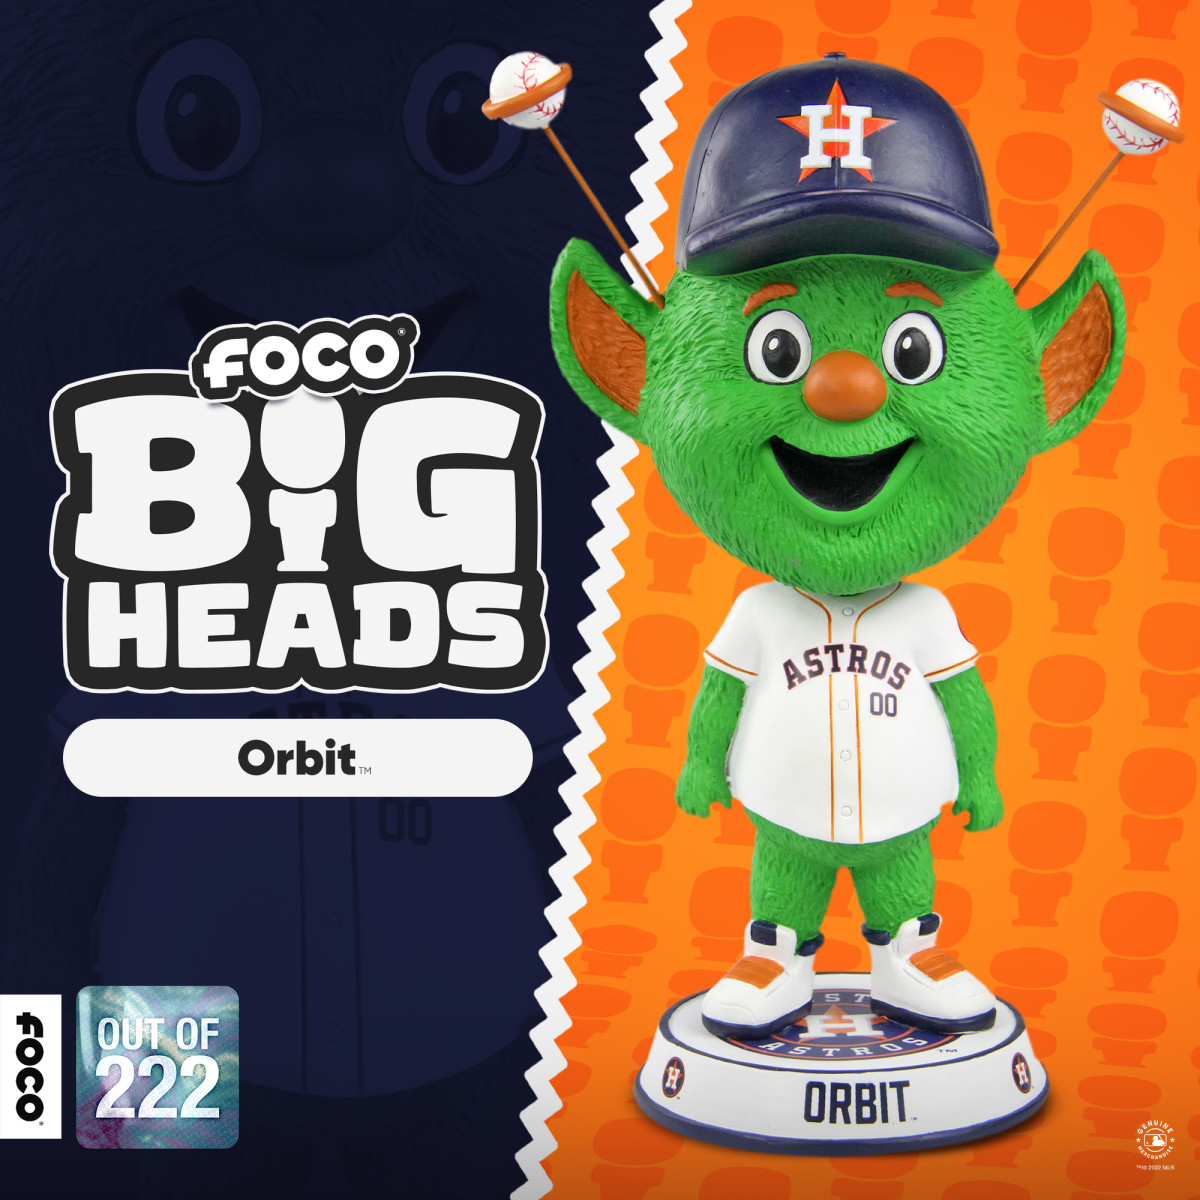 FOCO Bighead of Houston Astros Mascot Orbit